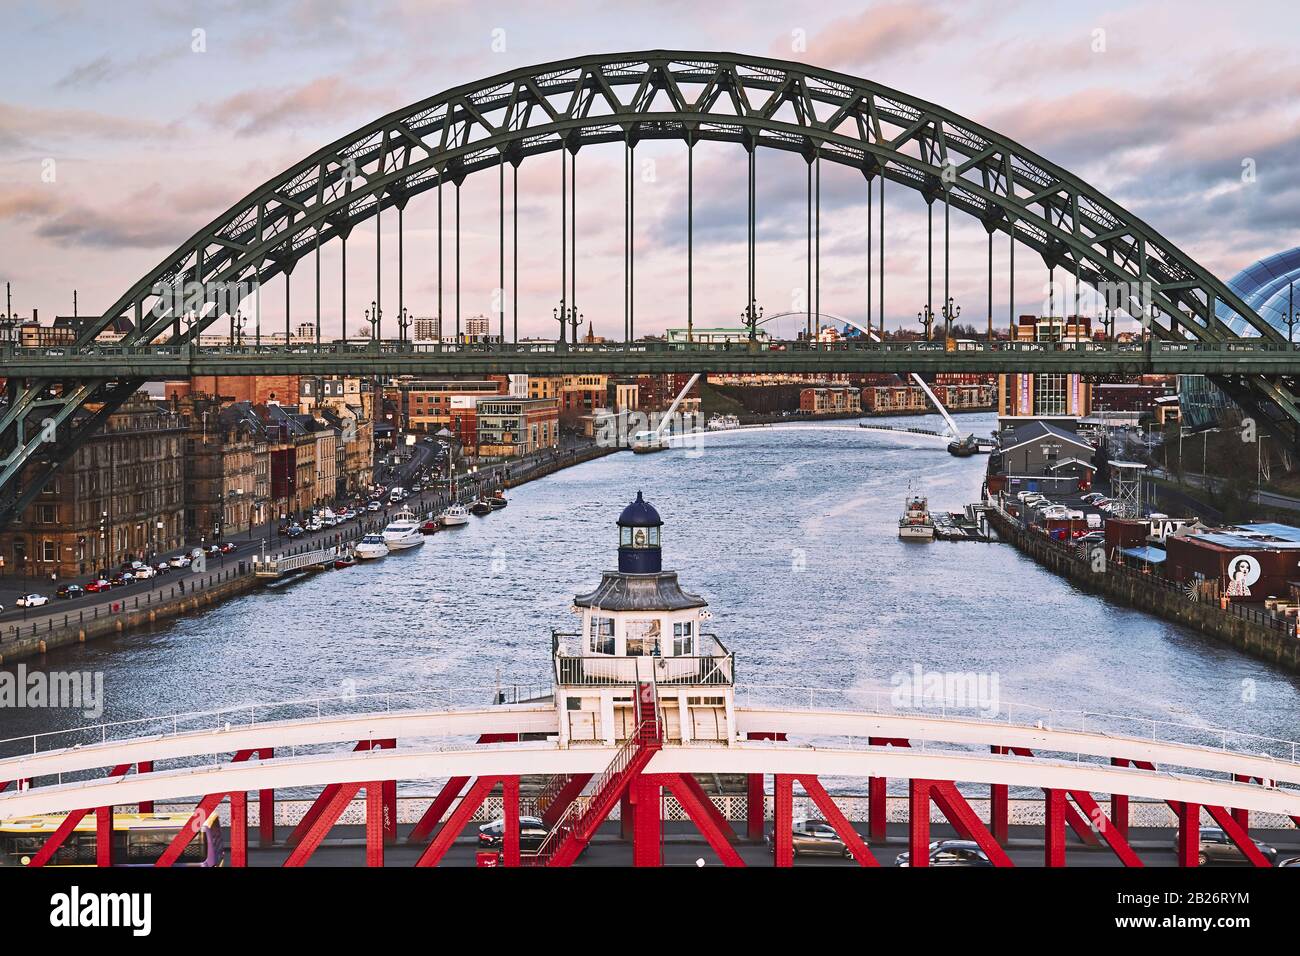 The Tyne and Swing bridges across the river Tyne Stock Photo